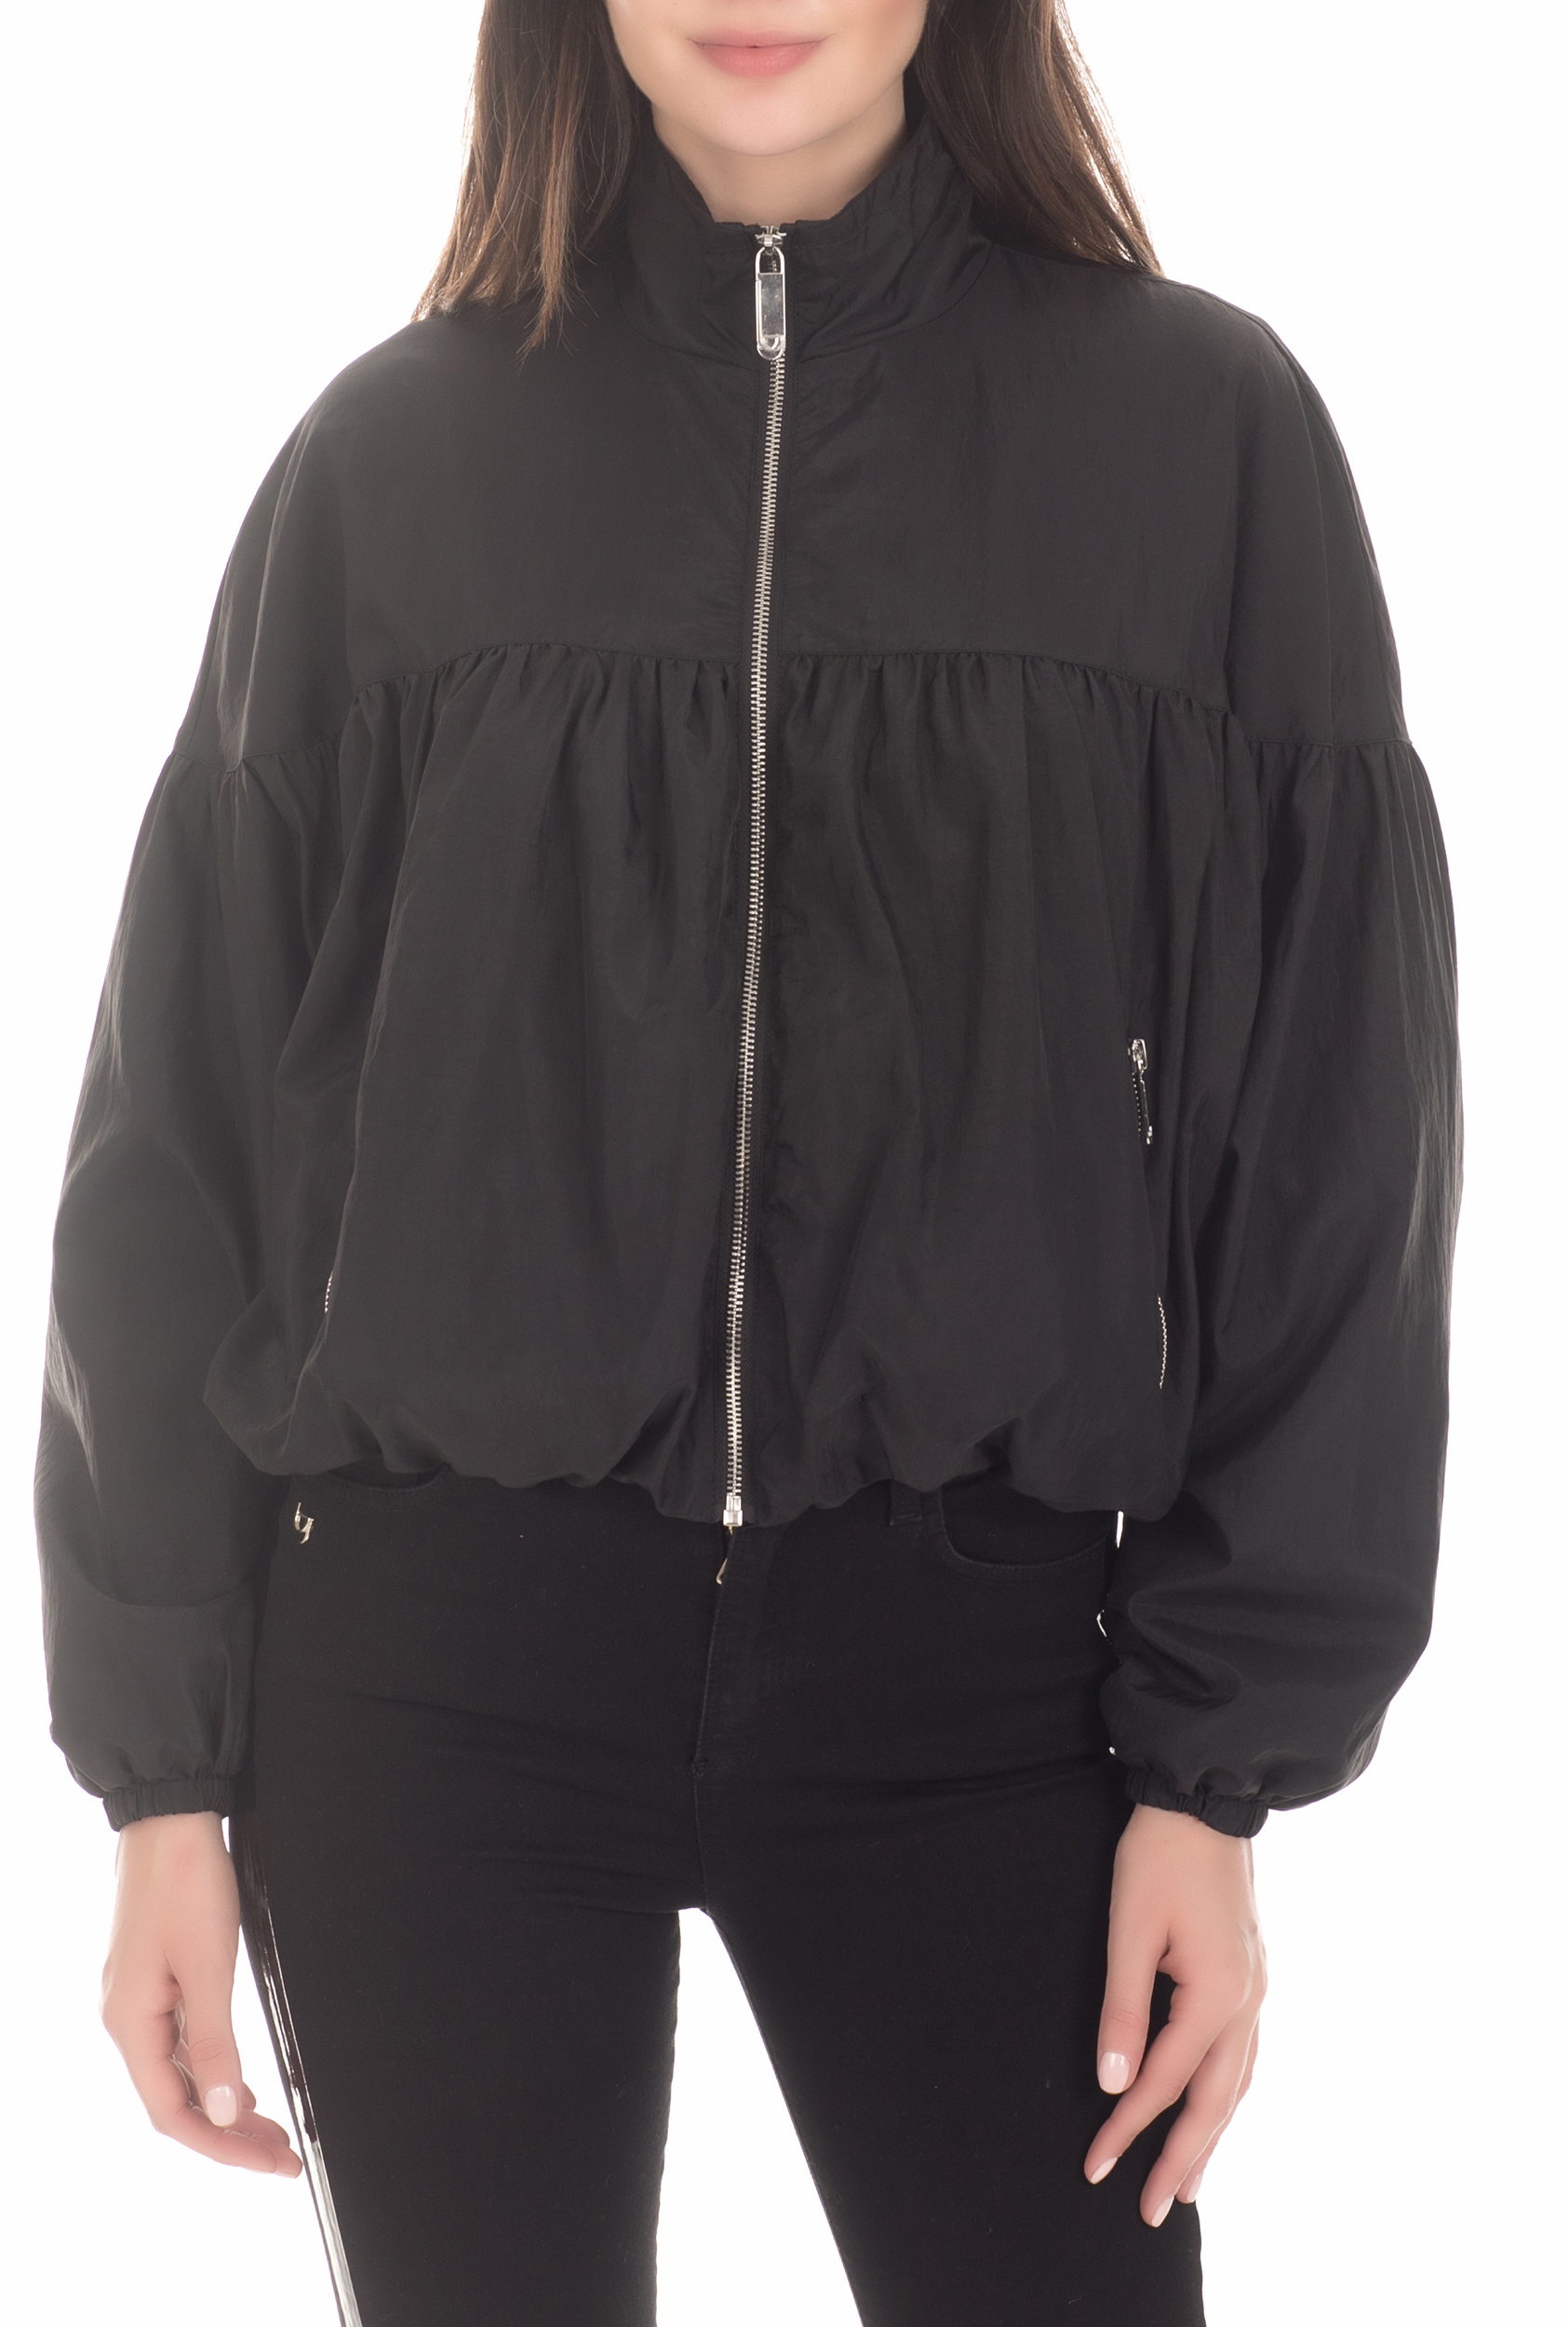 BYBLOS - Γυναικείο jacket BYBLOS μαύρο Γυναικεία/Ρούχα/Πανωφόρια/Τζάκετς